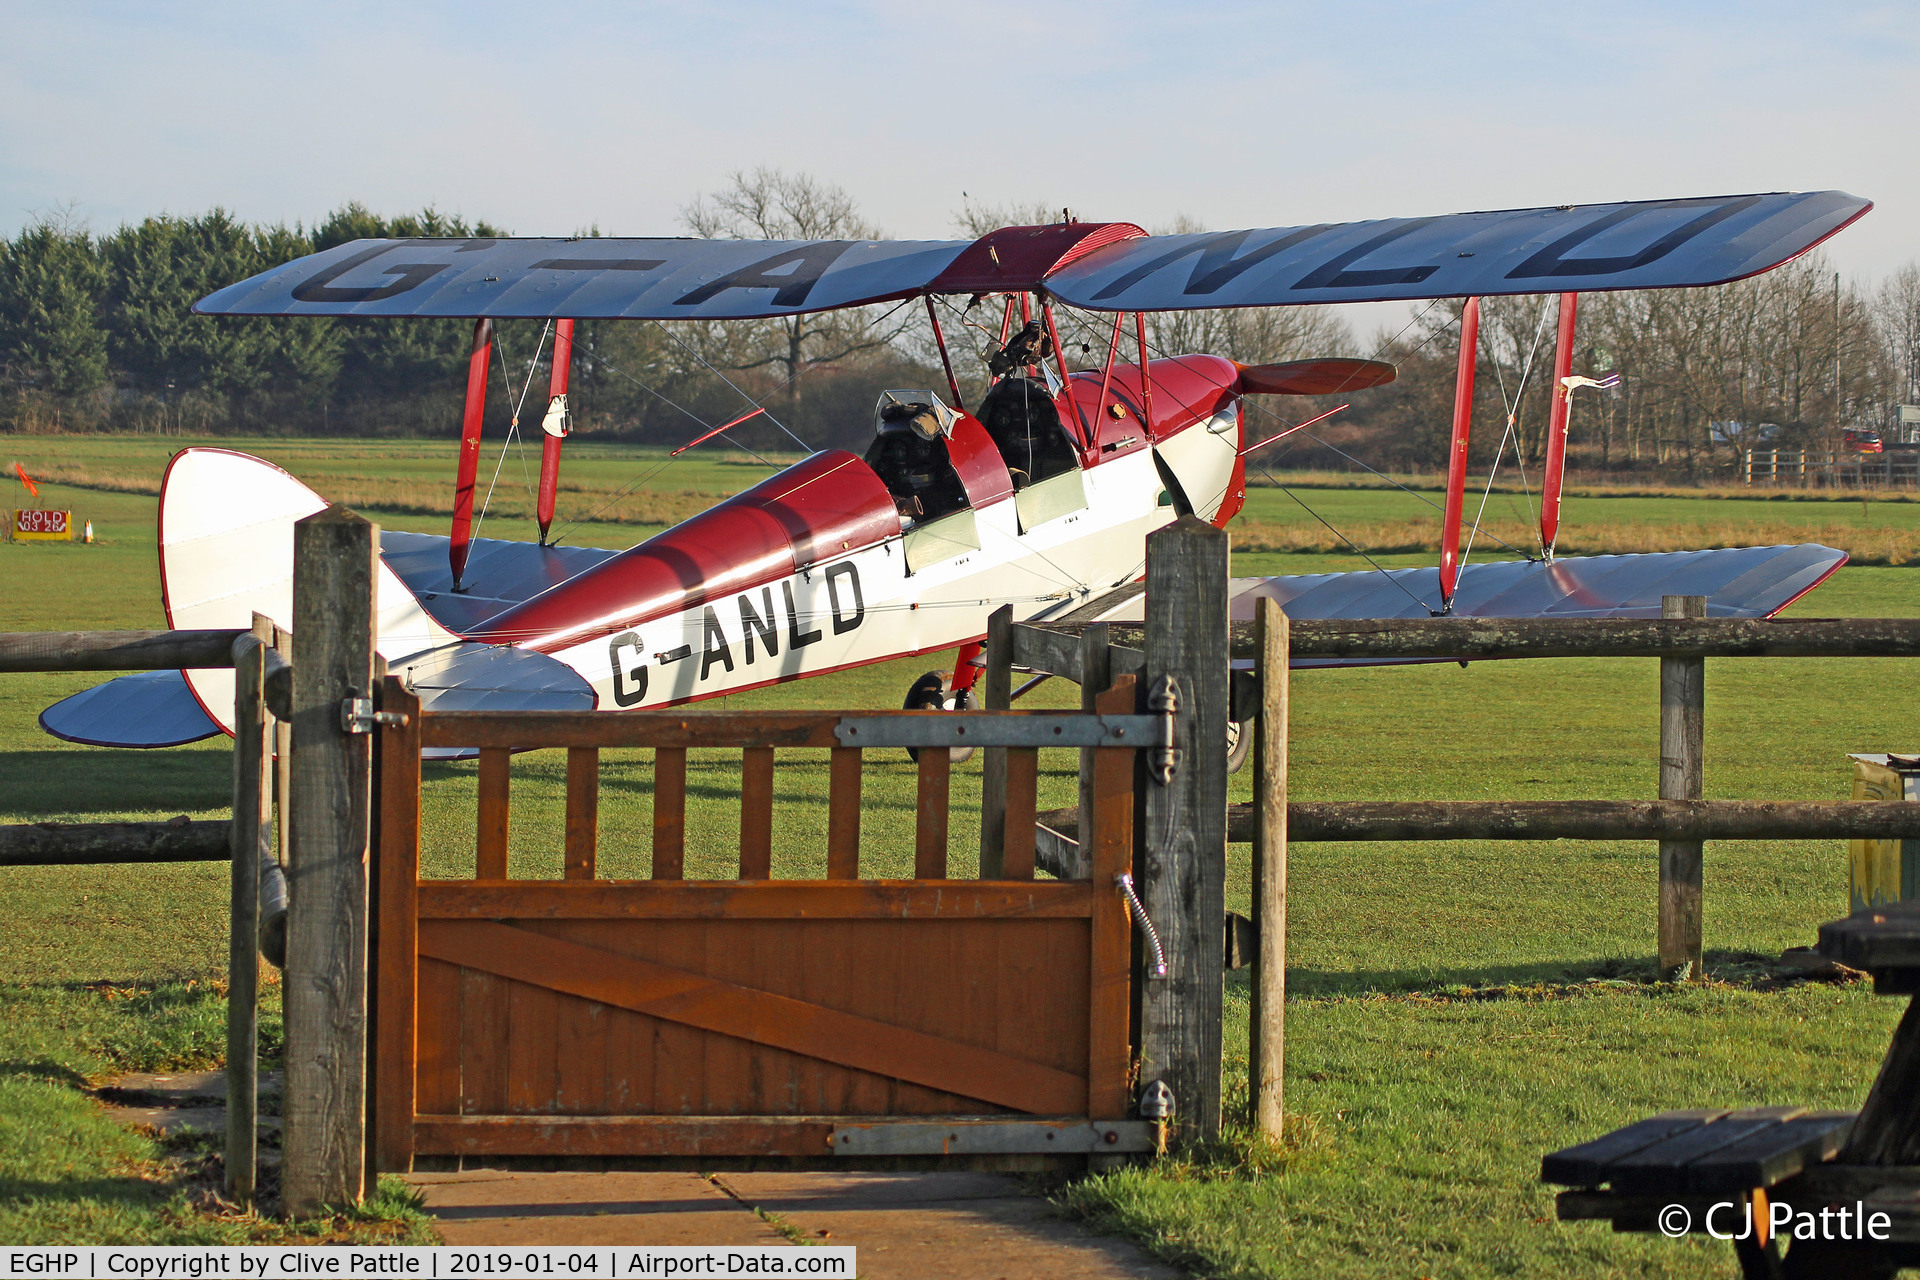 Popham Airfield Airport, Popham, England United Kingdom (EGHP) - Aircraft viewing area - access to airside @ Popham